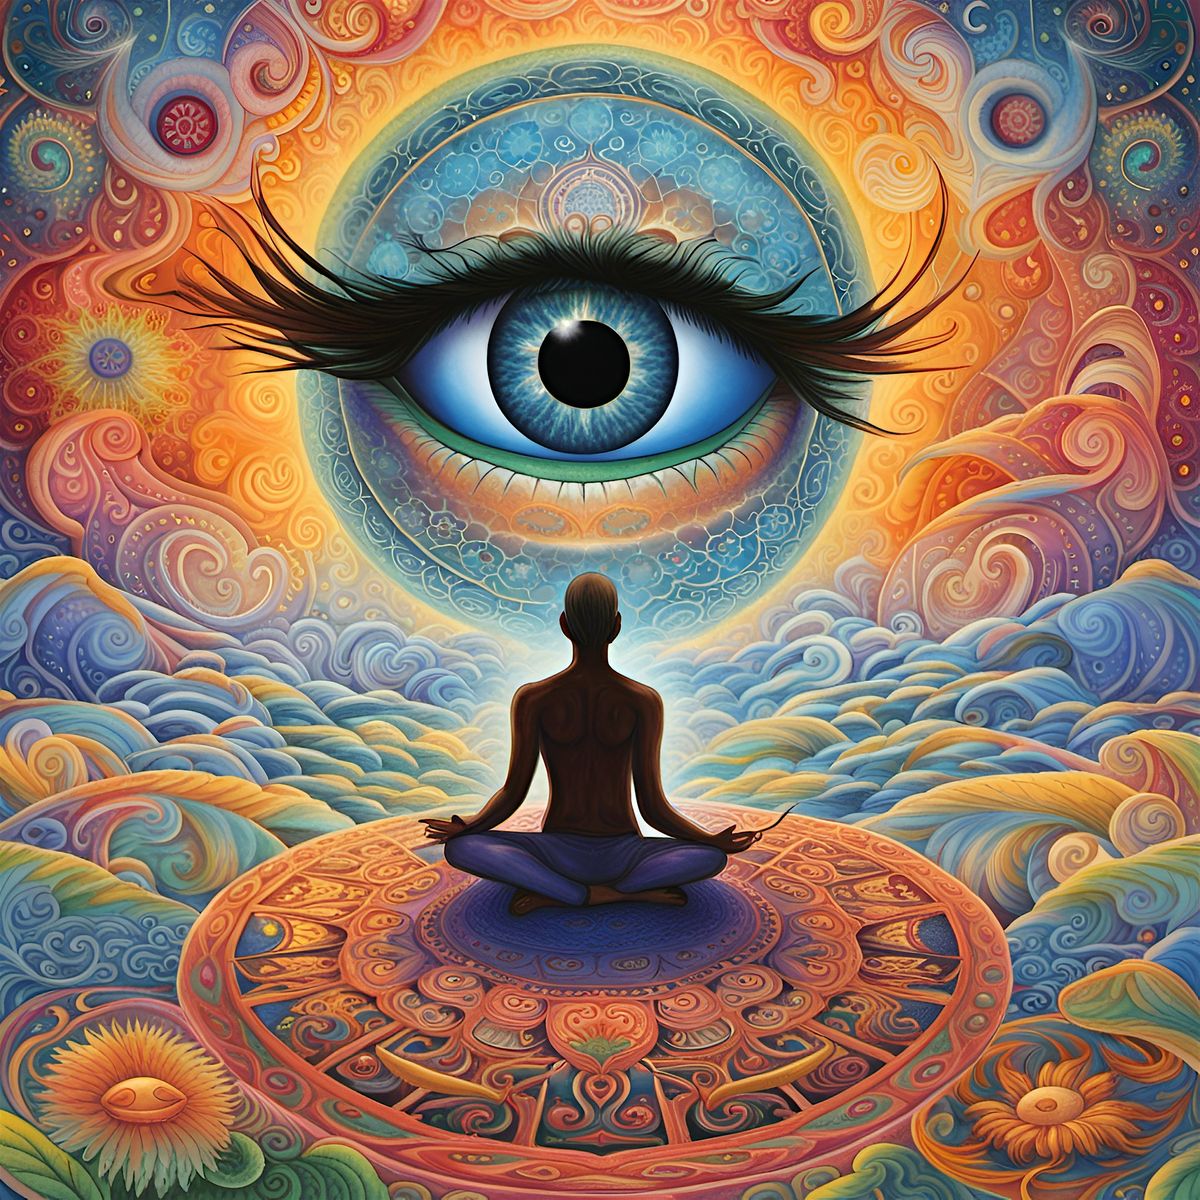 Soul gazing meditation